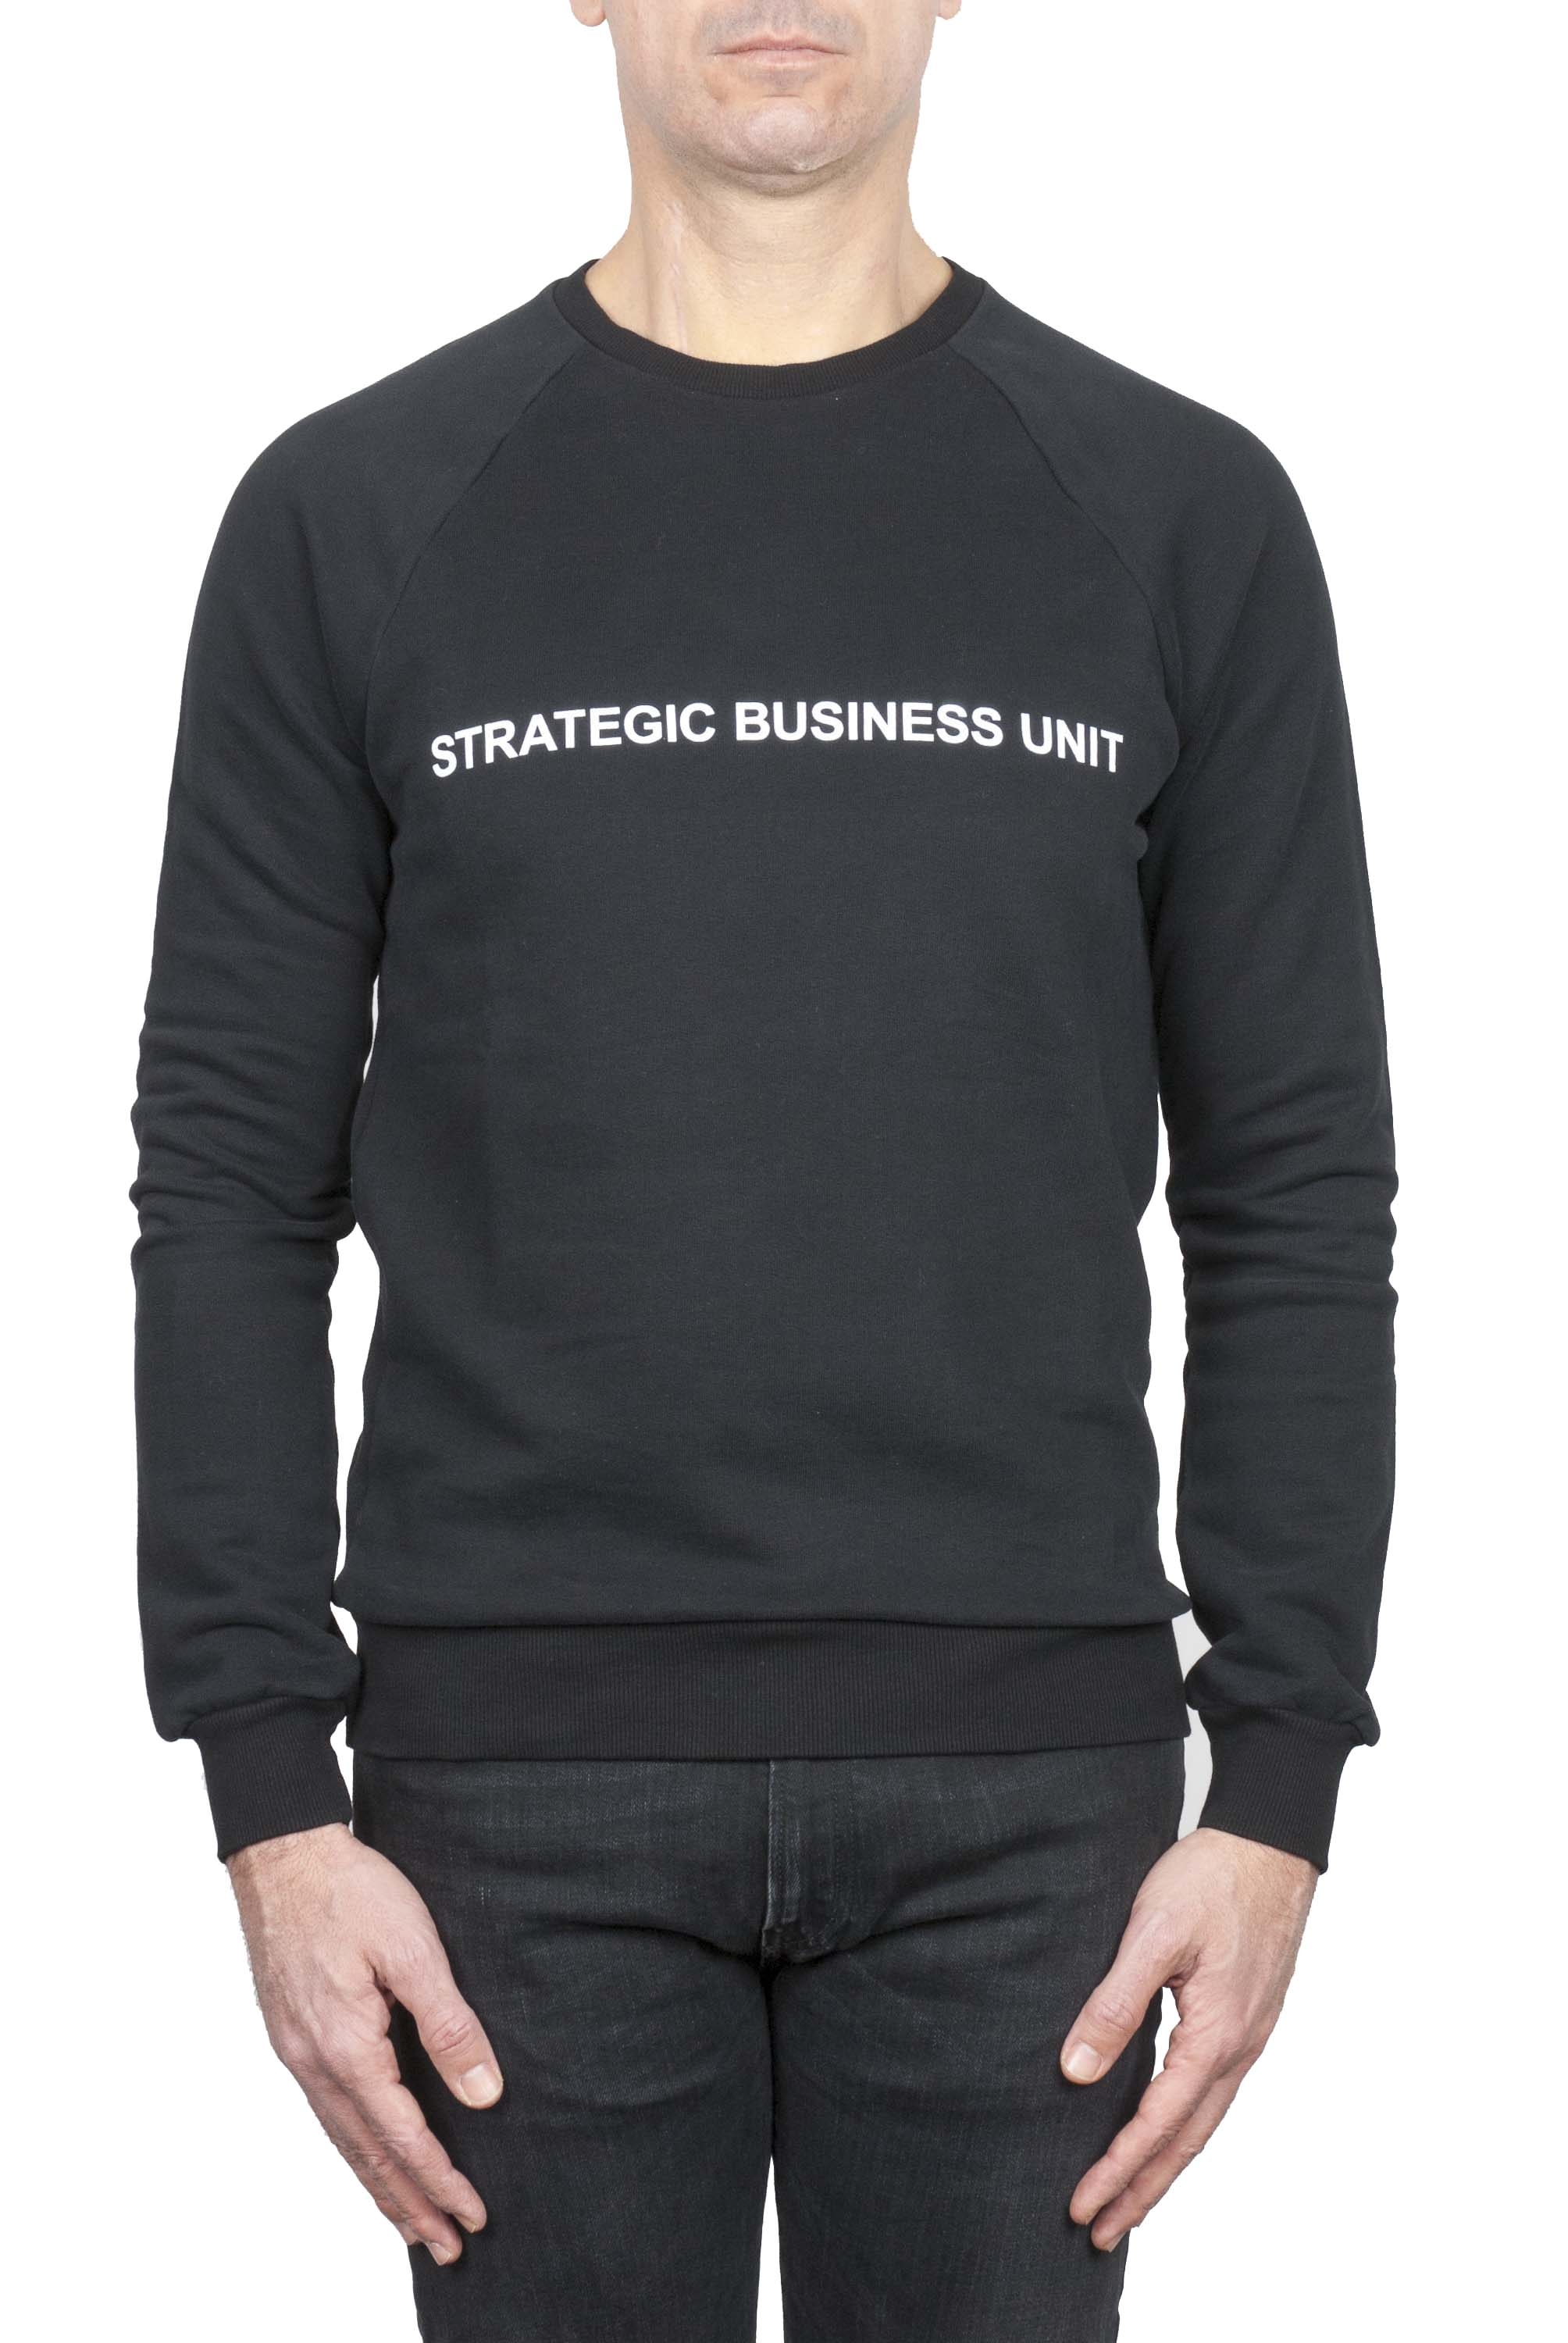 SBU 01467_19AW Strategic Business Unitロゴプリントクルーネックスウェットシャツ 01